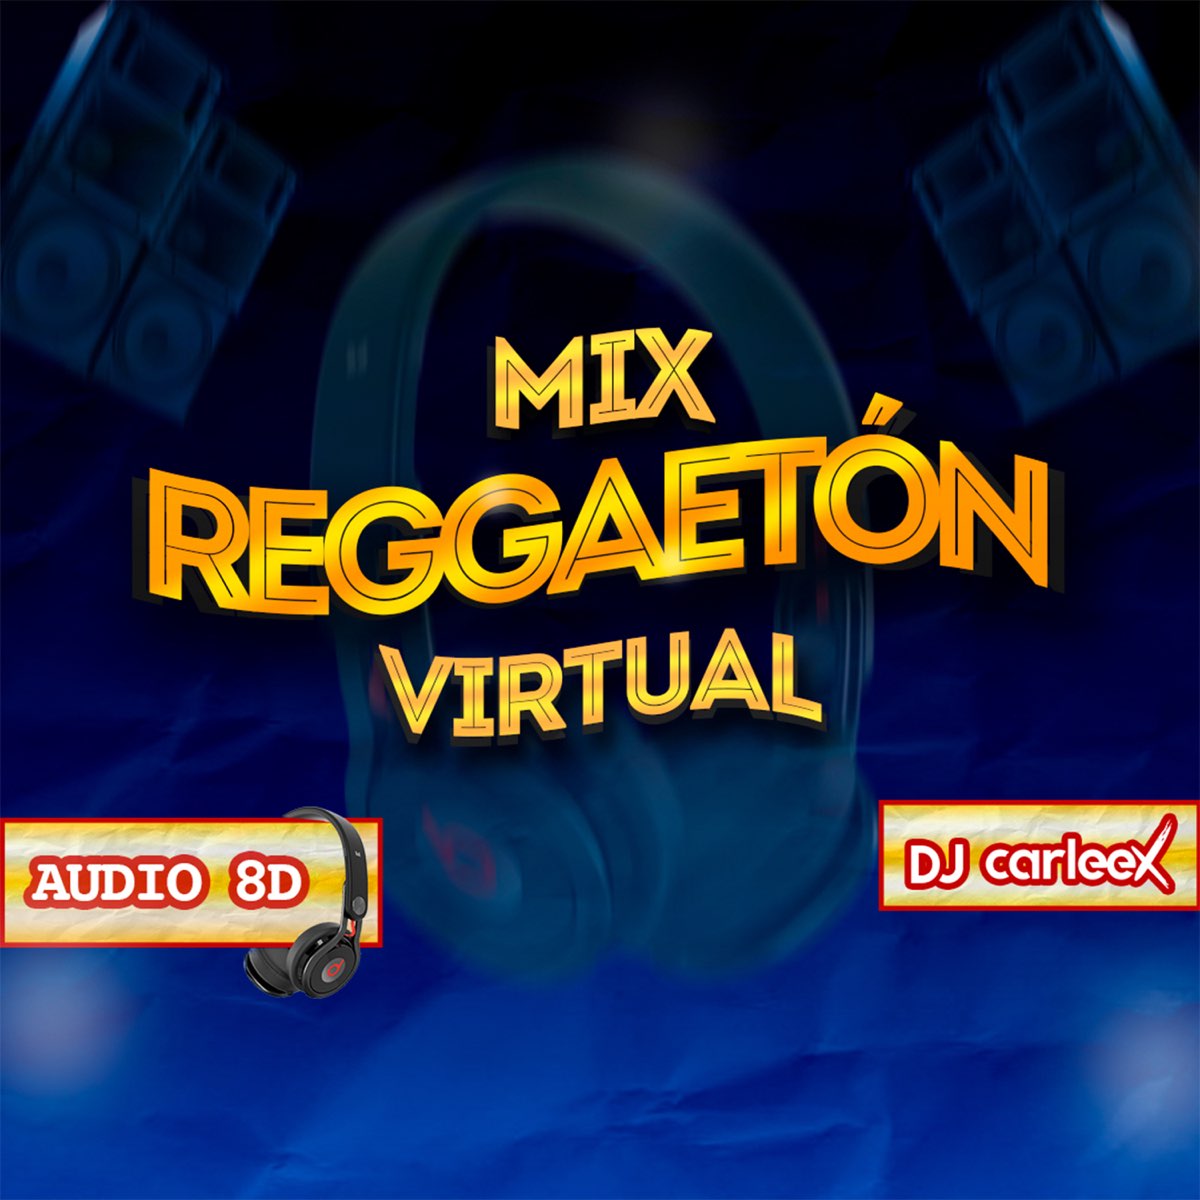 Mix Reggaetón Virtual (Audio 8d) - EP by DJ CARLEEX on Apple Music